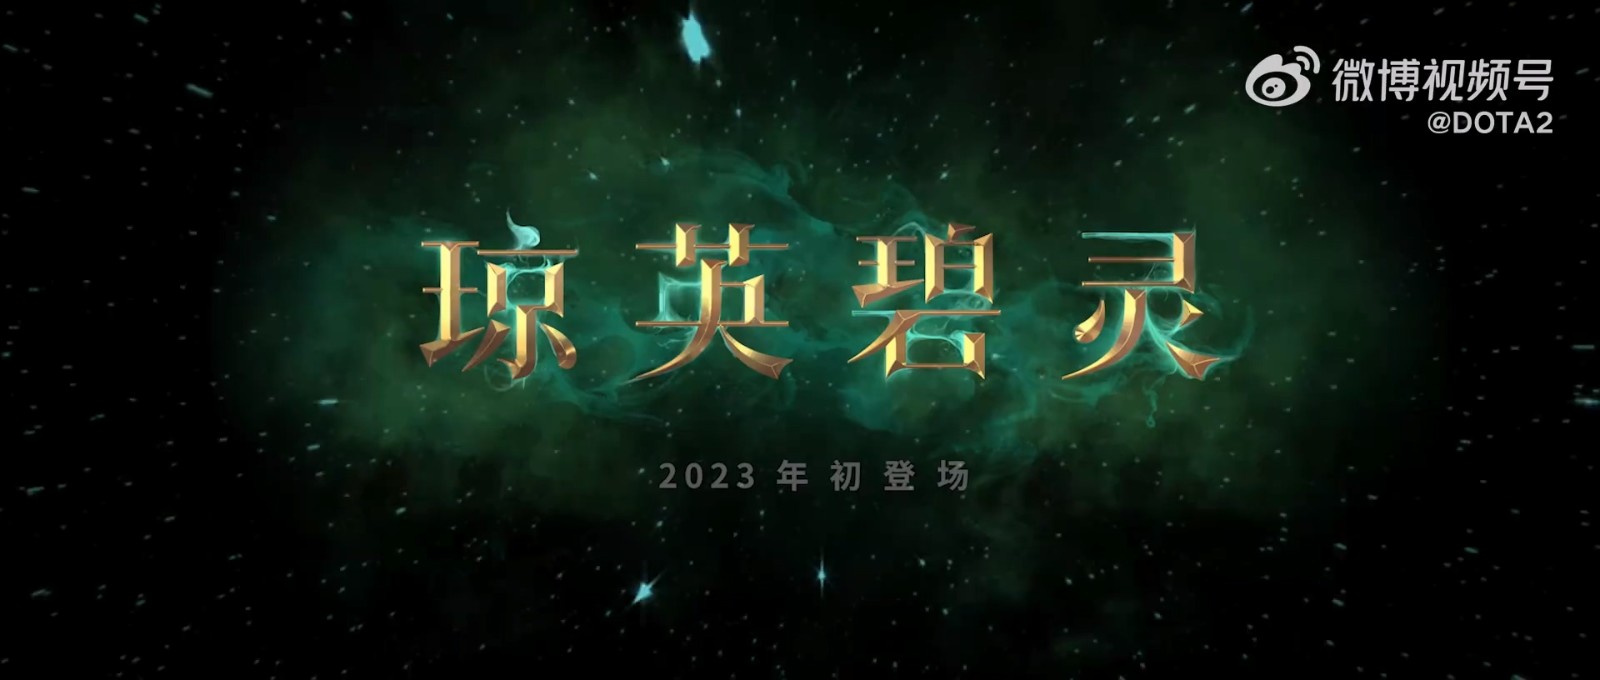 《DOTA2》新英雄琼英碧灵公布 2023年上线 二次世界 第7张